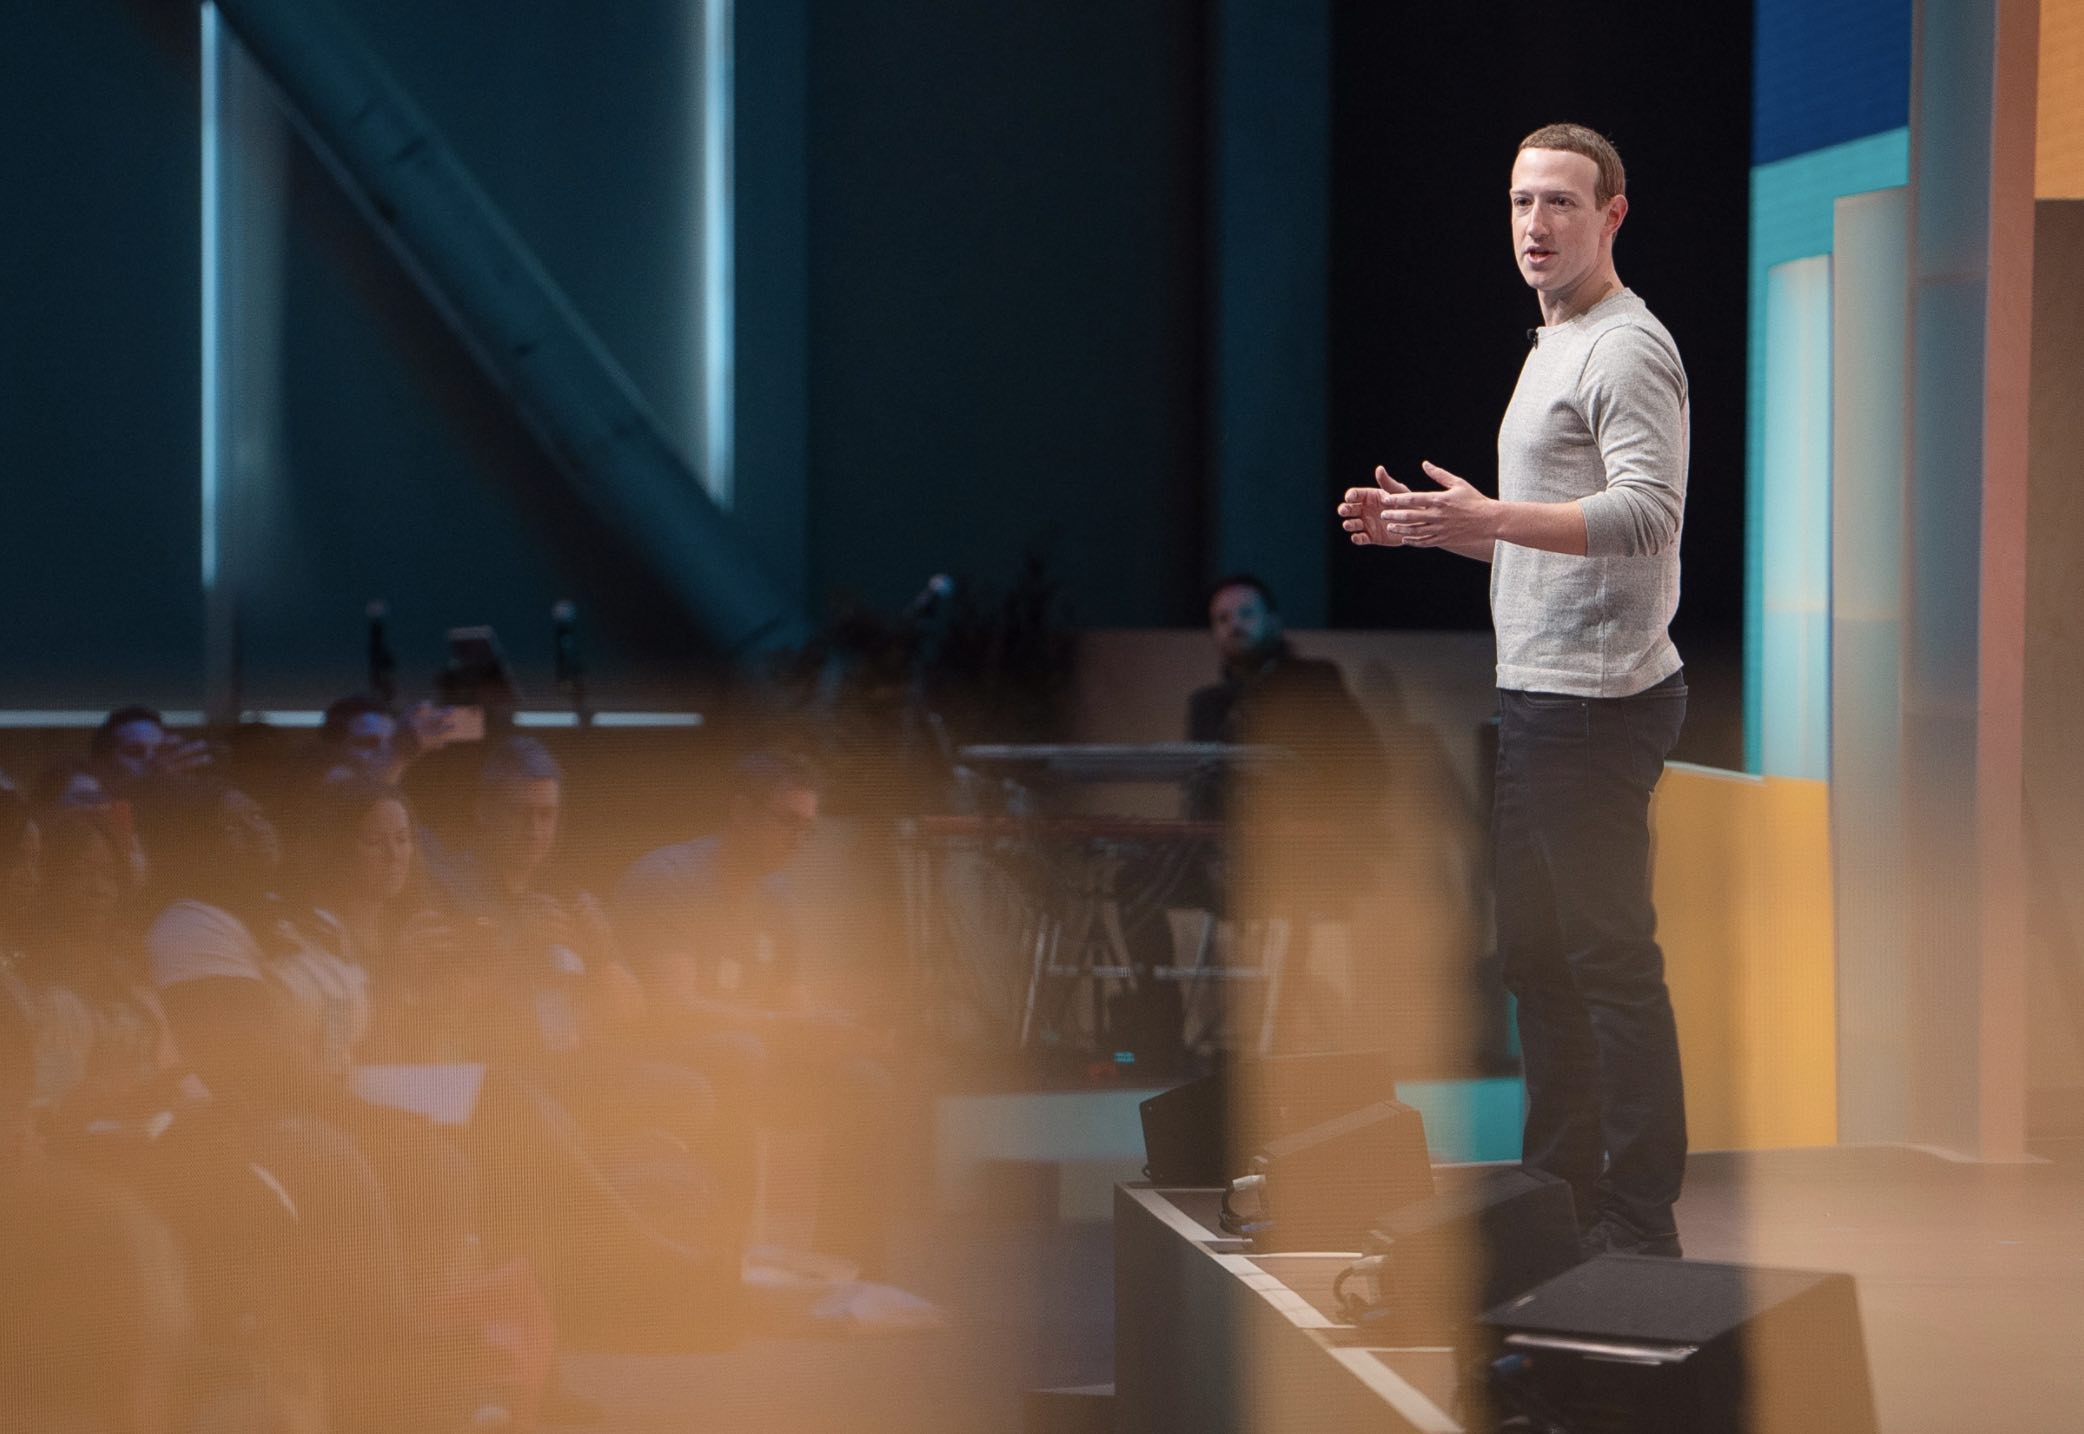 facebook ceo mark zuckerberg on stage